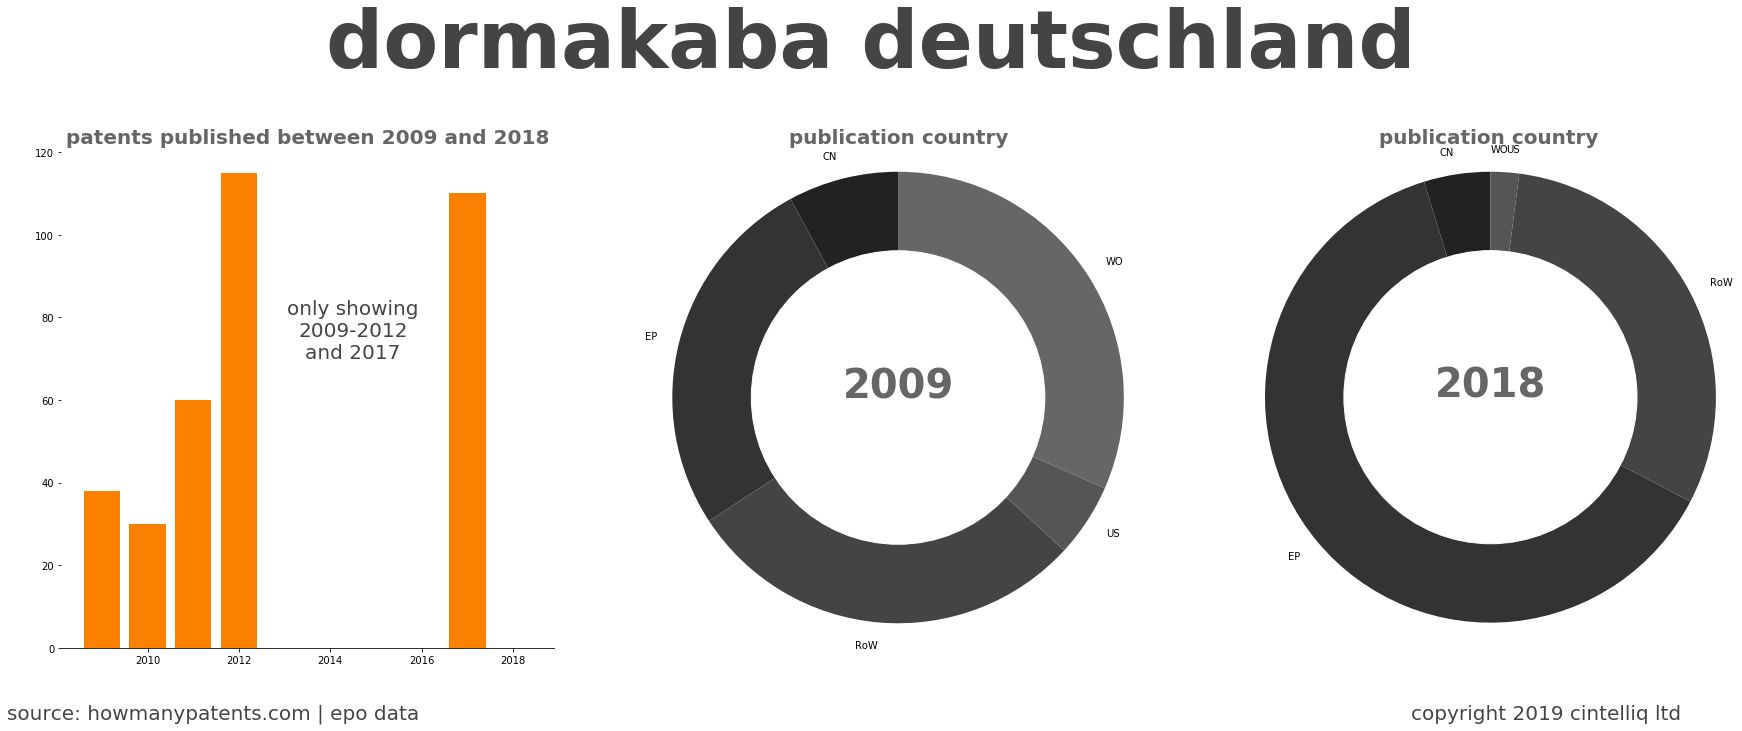 summary of patents for Dormakaba Deutschland